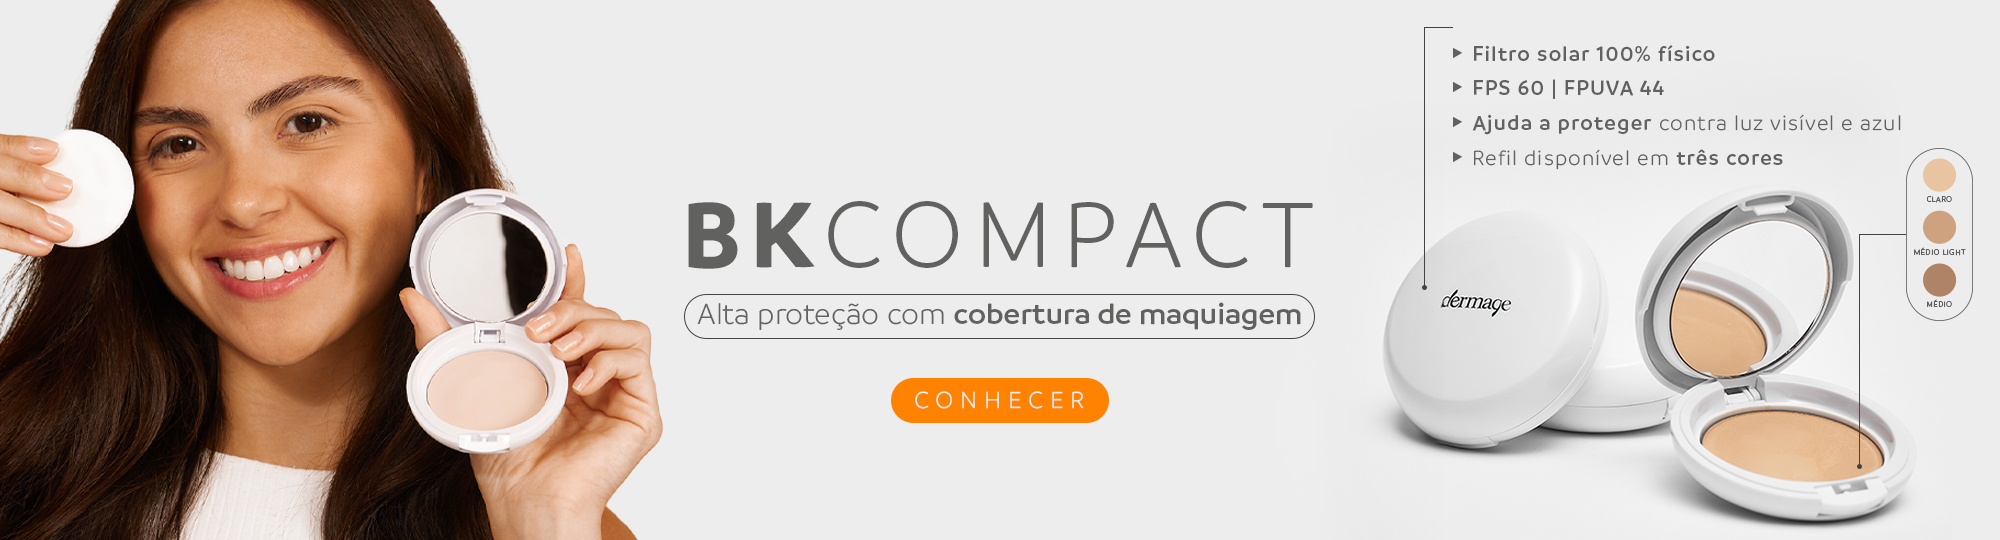 bk compact